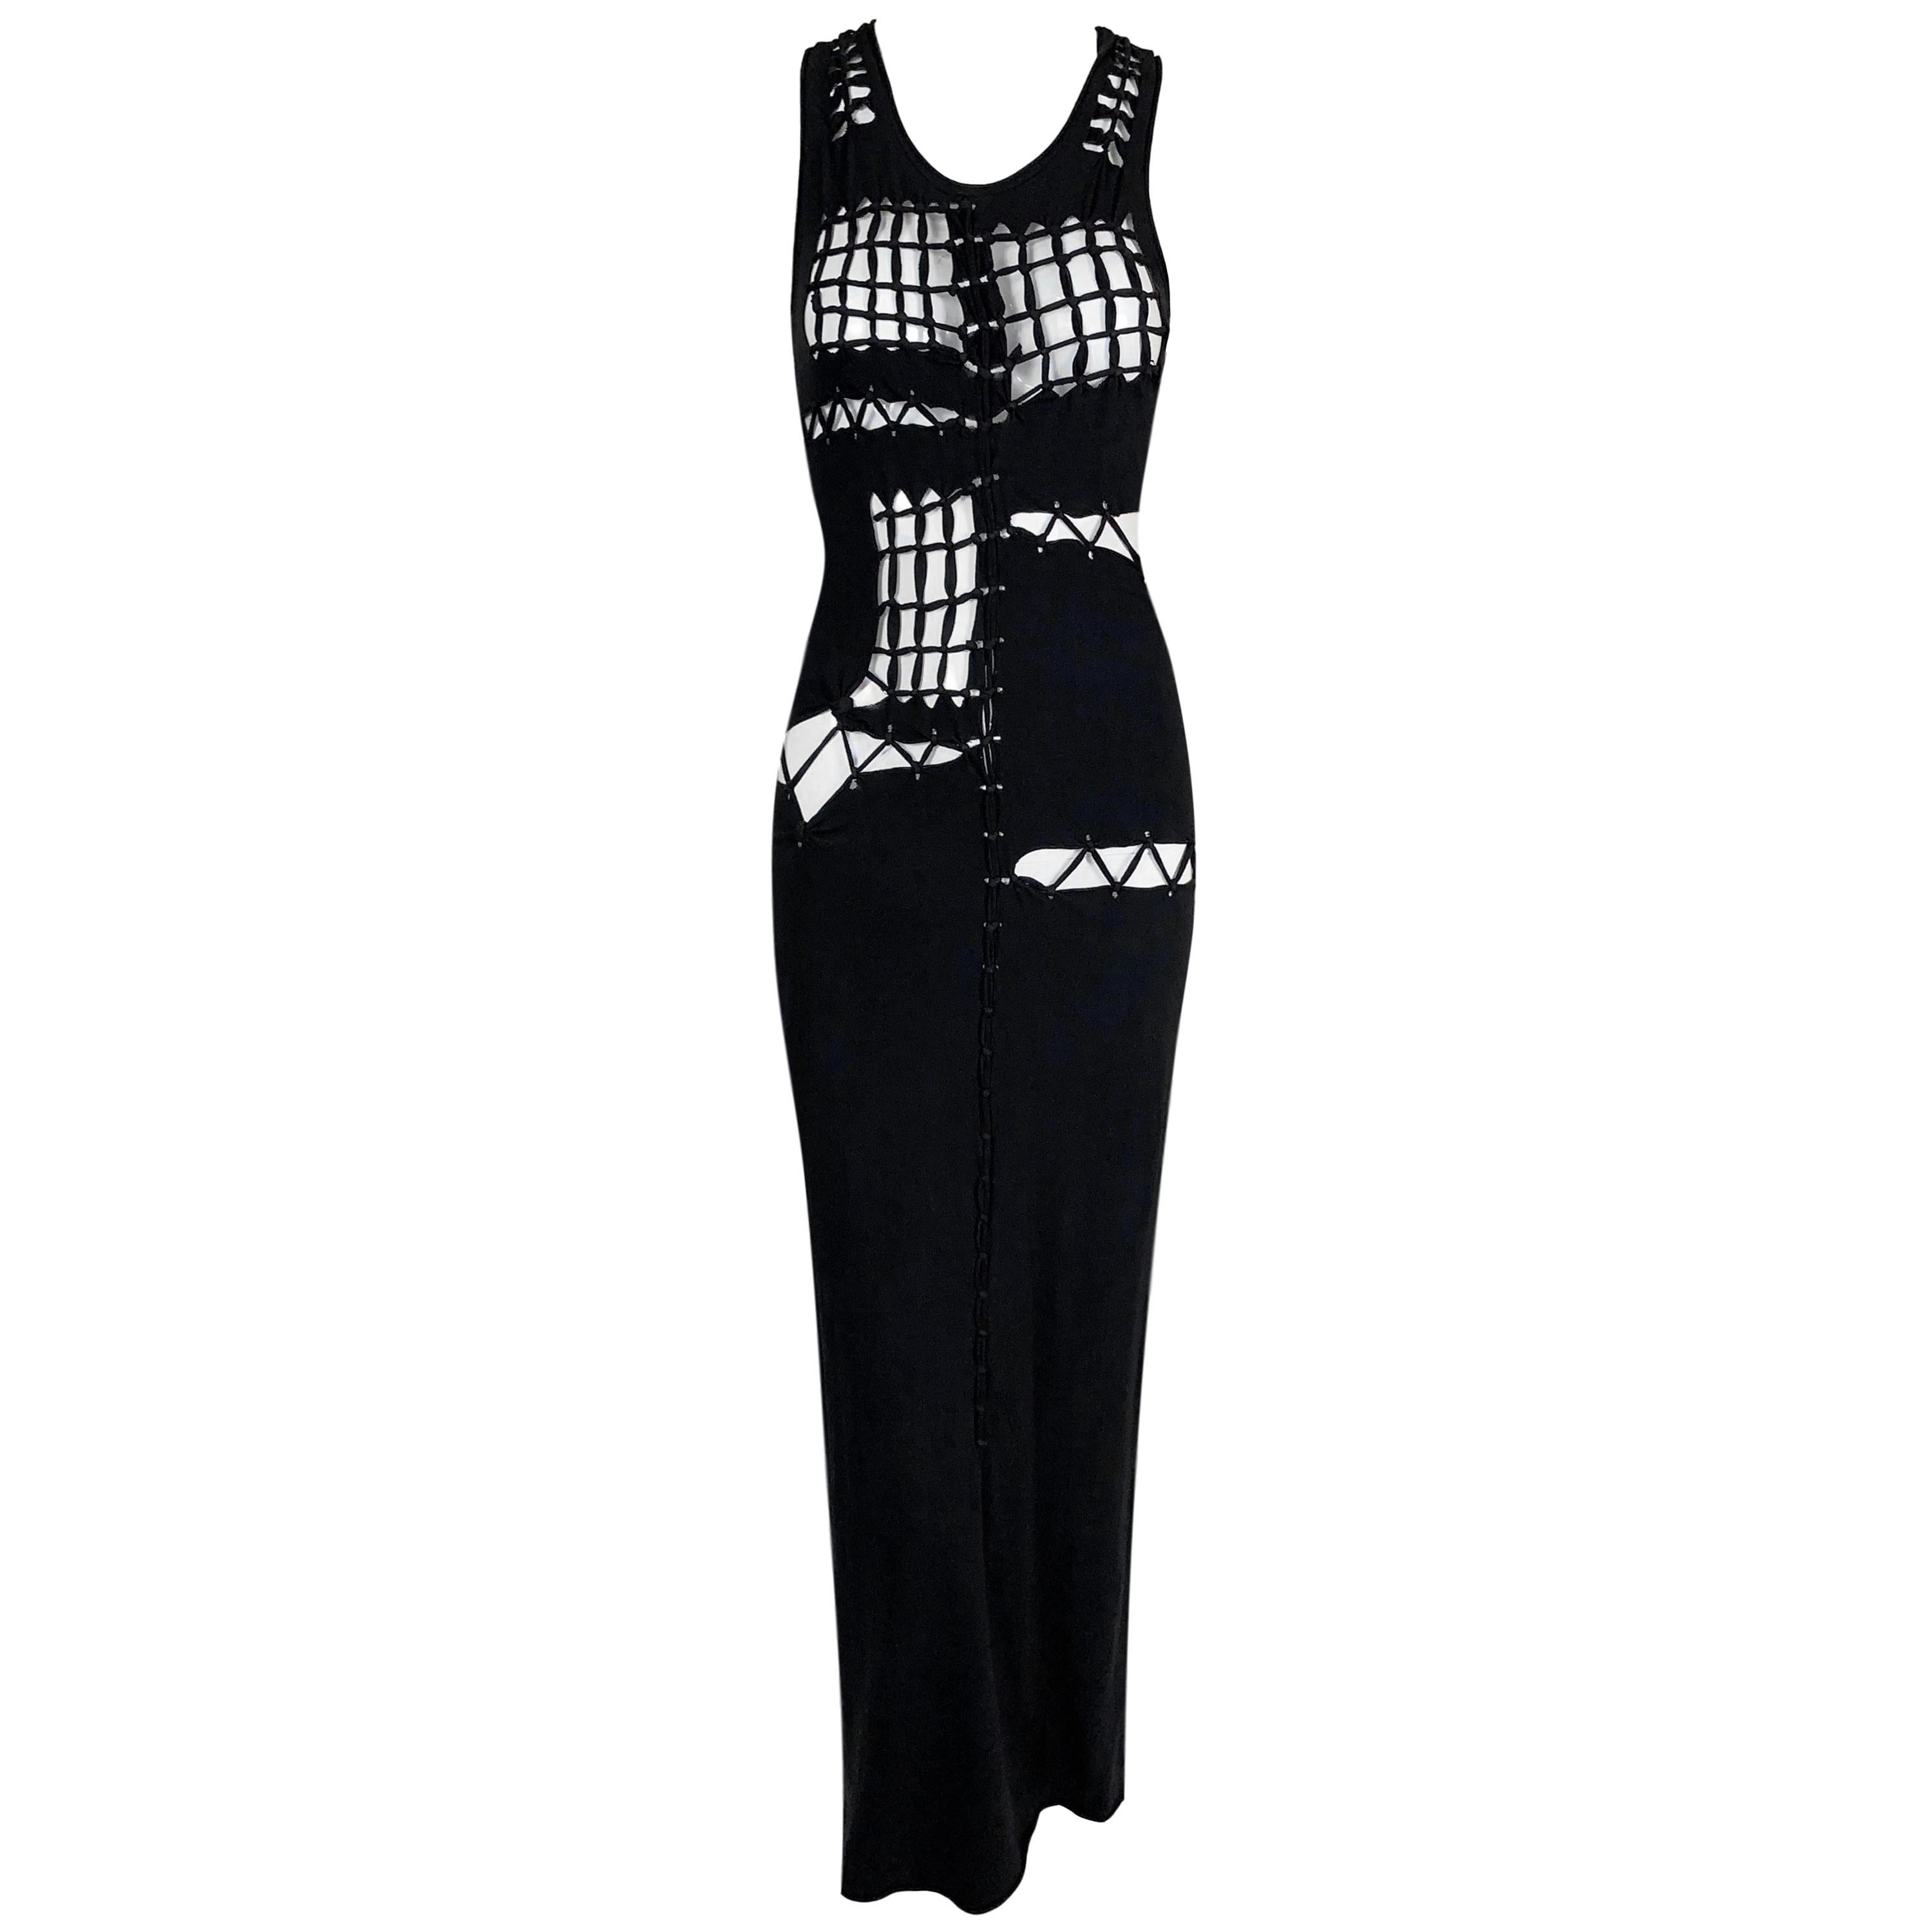 S/S 2001 Jean Paul Gaultier Runway Black Cut-Out Sheer Long Dress